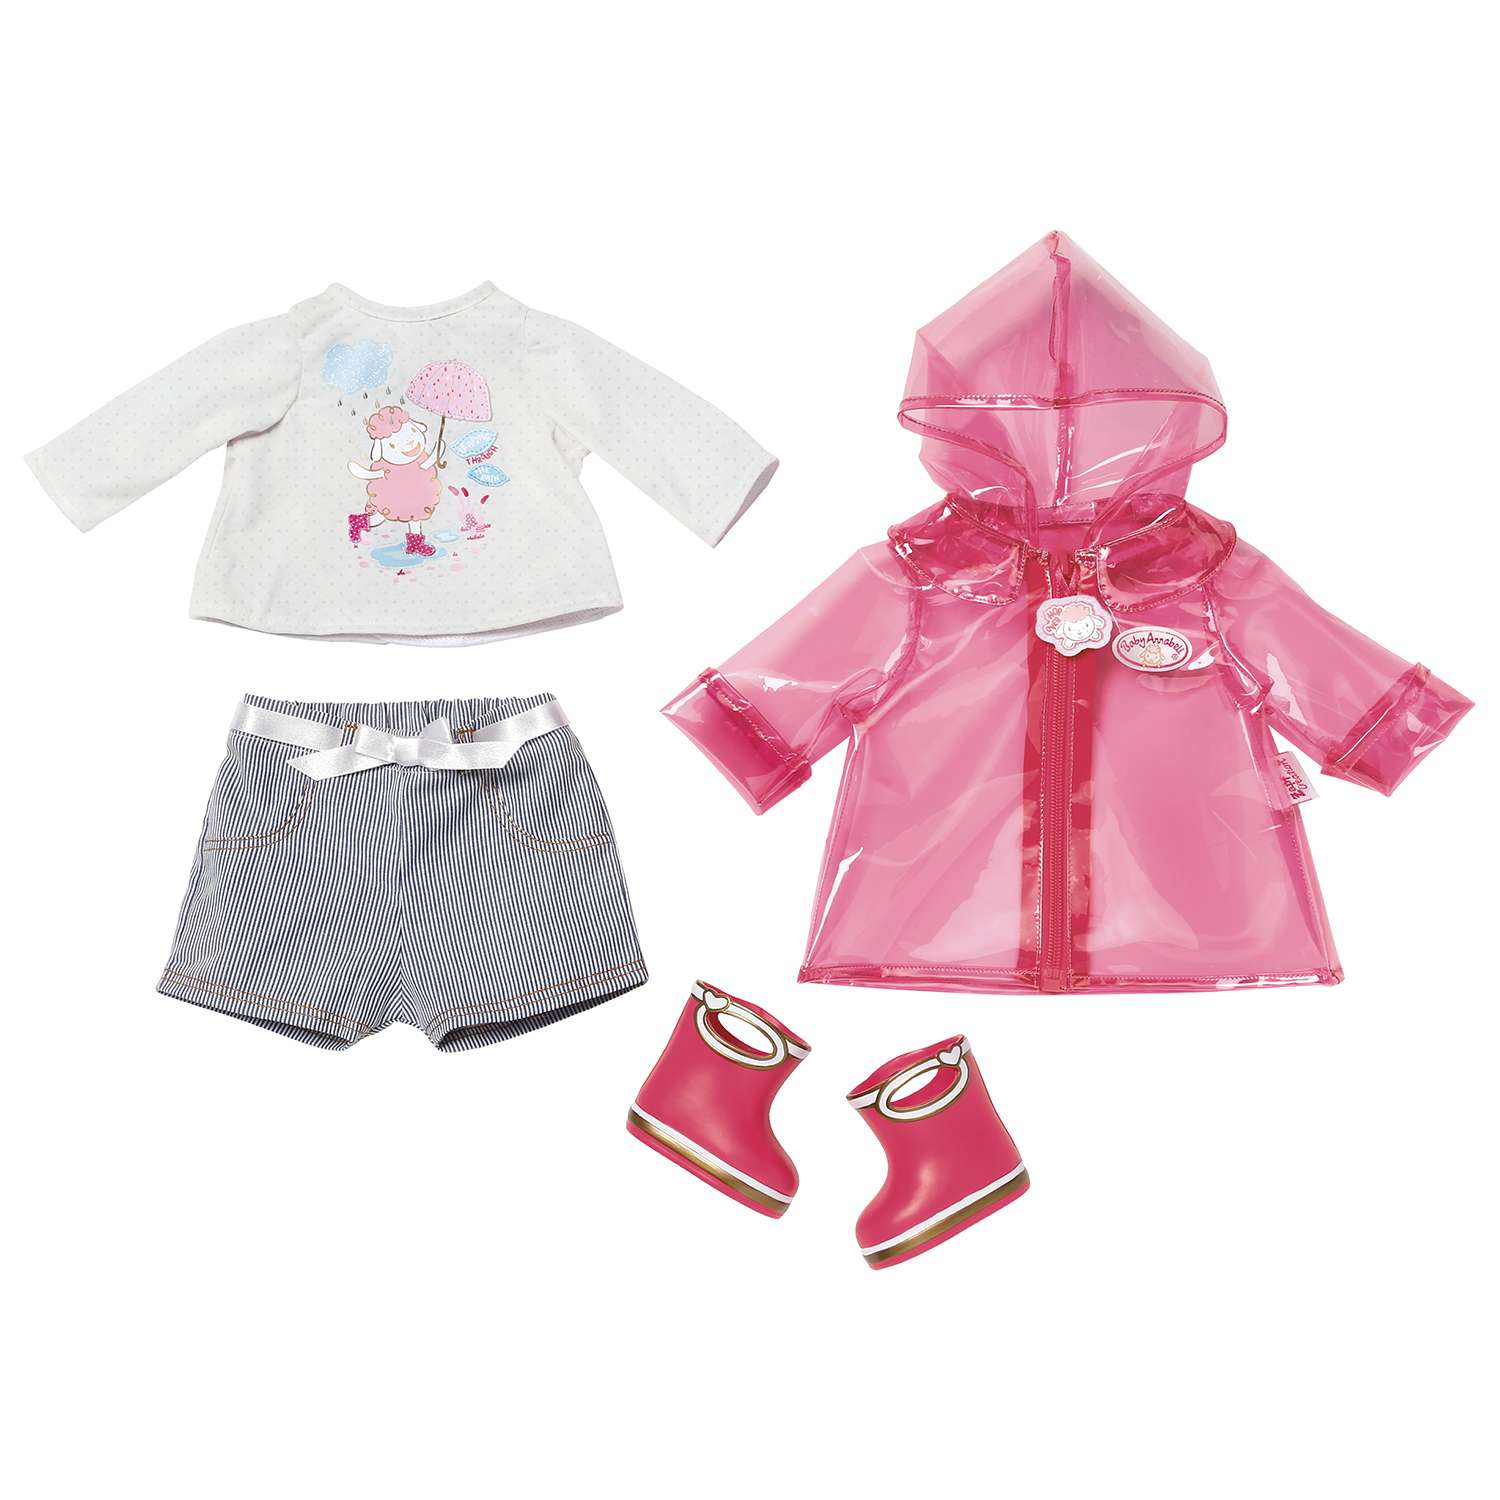 Одежда для куклы Беби Аннабель одежда